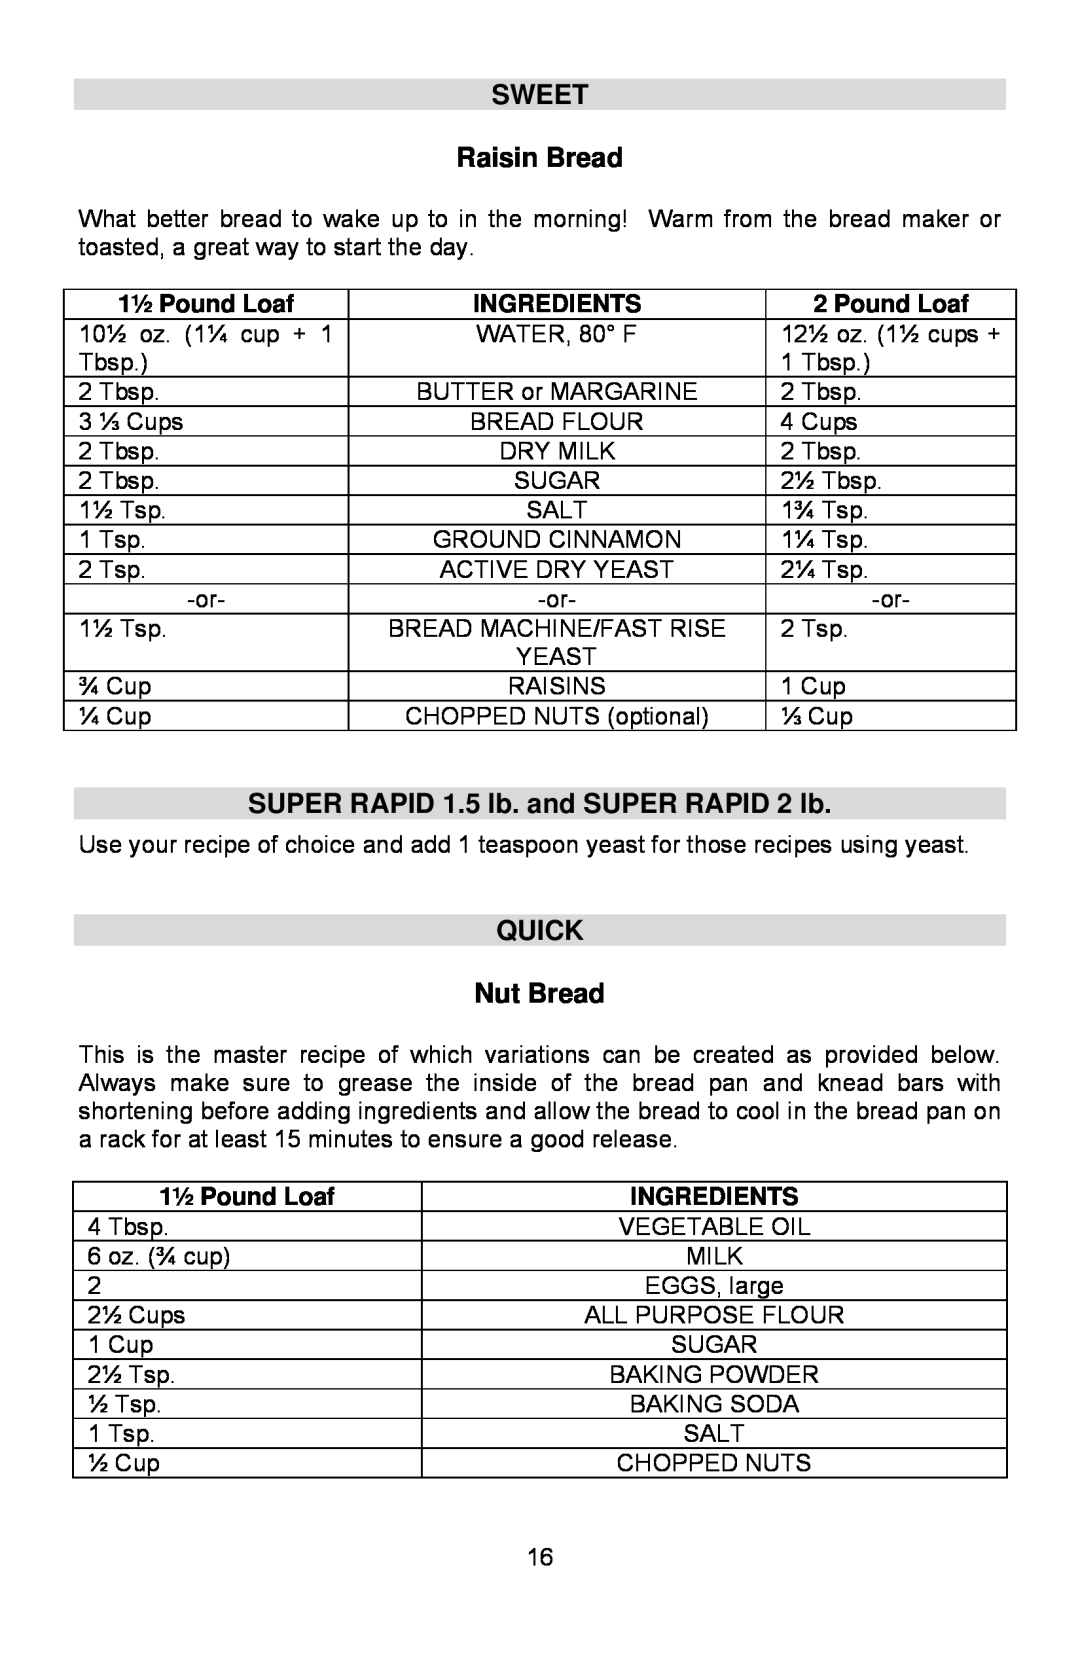 West Bend L5689A SWEET Raisin Bread, SUPER RAPID 1.5 lb. and SUPER RAPID 2 lb, QUICK Nut Bread, 1½ Pound Loaf, Ingredients 